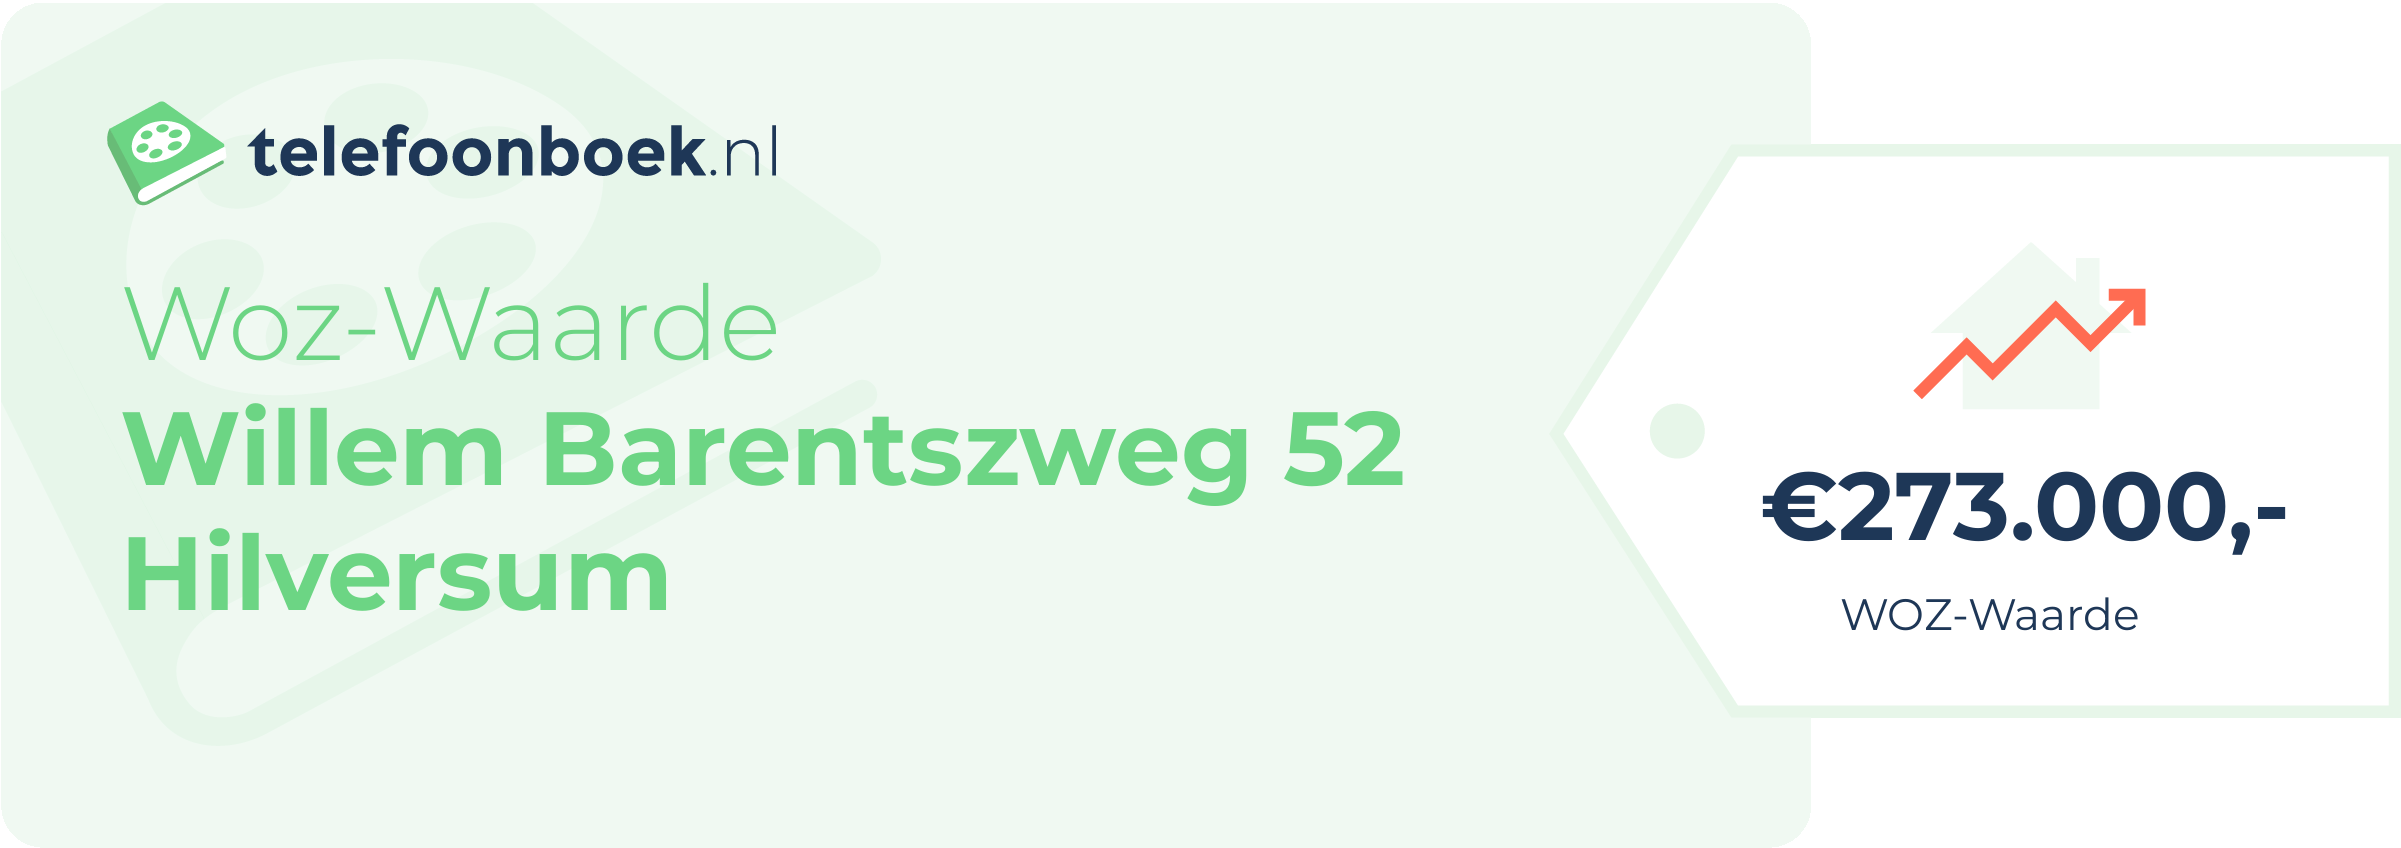 WOZ-waarde Willem Barentszweg 52 Hilversum